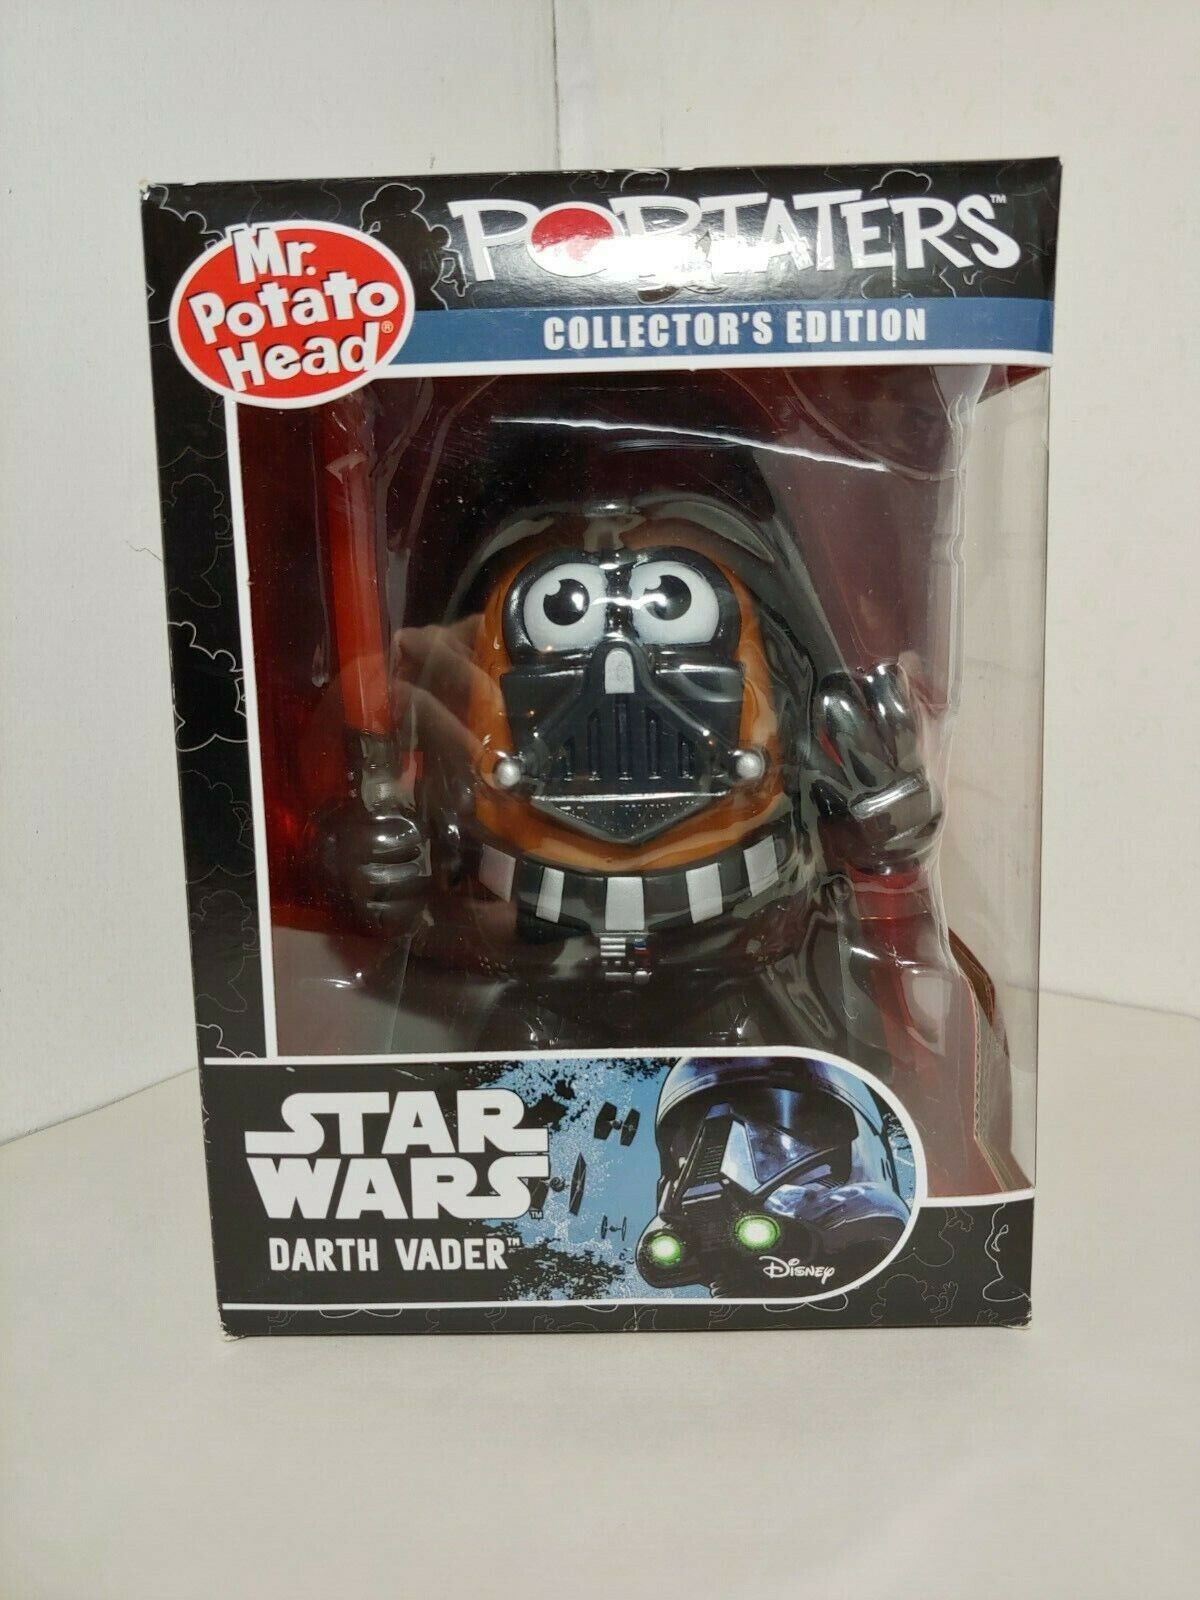 Star Wars Mr Potato Head Pop Taters Collectors Edition Darth Vader New in Box